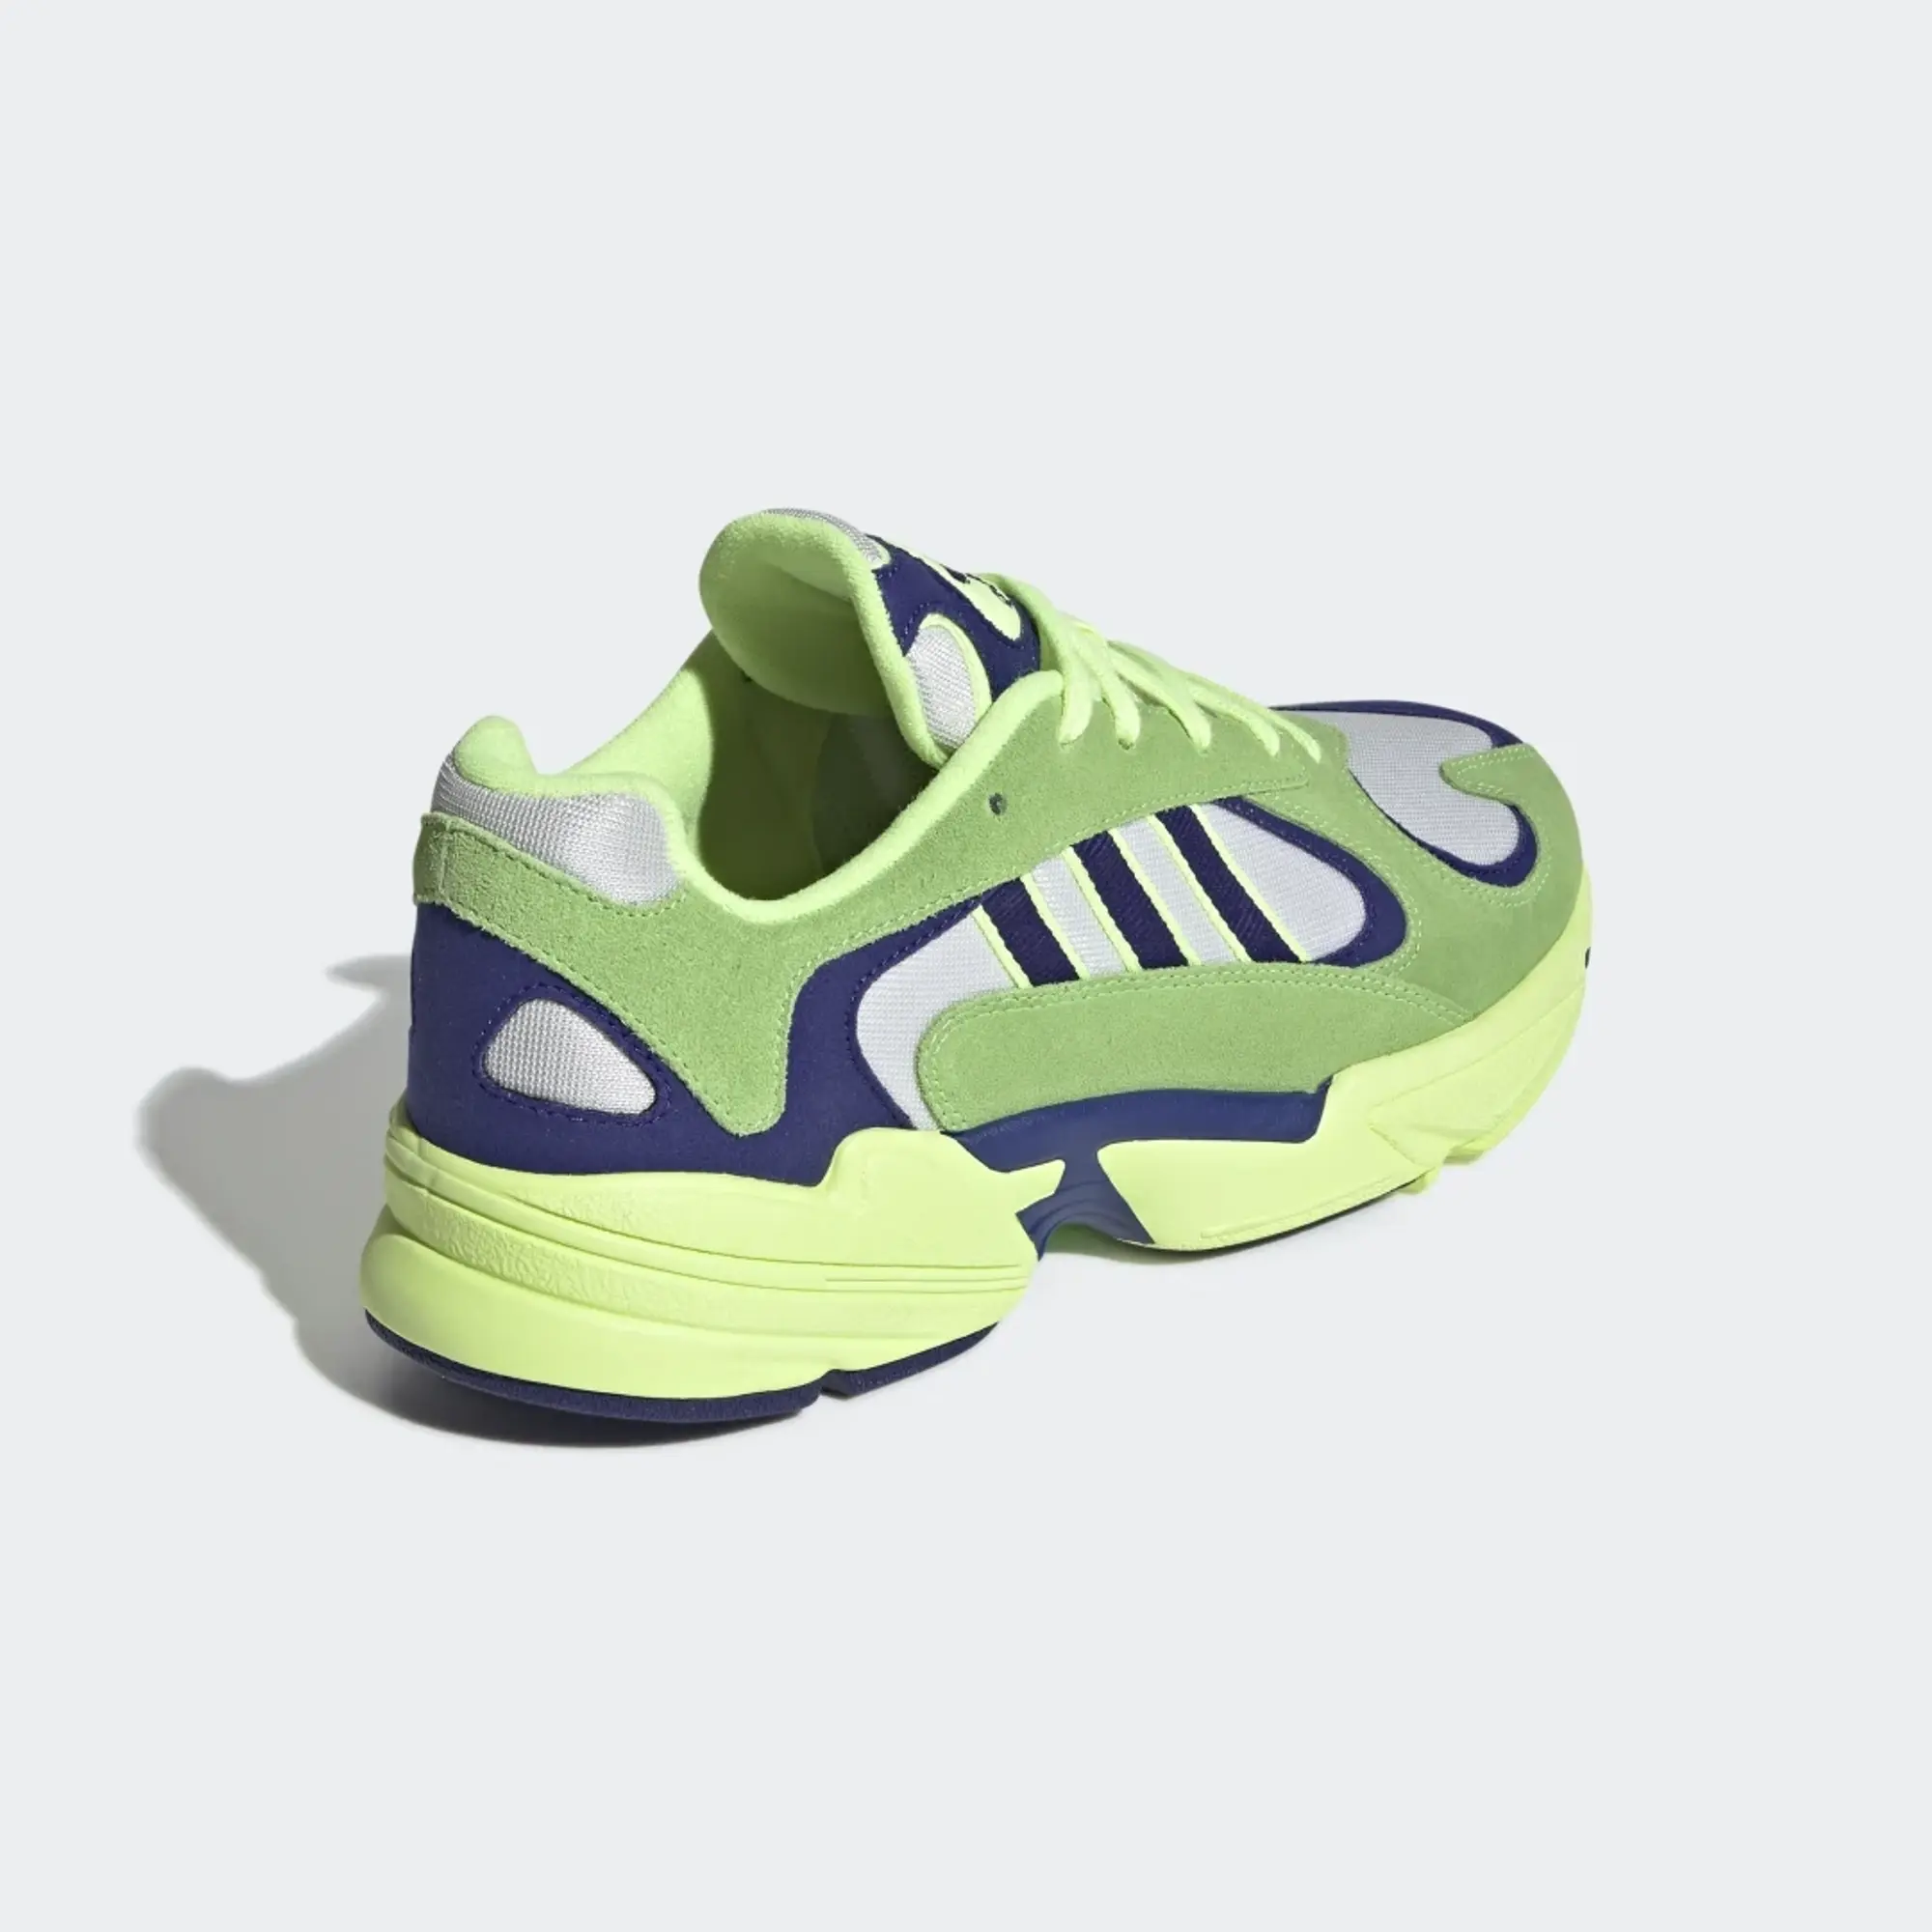 adidas Yung-1 Solar Green Shoes